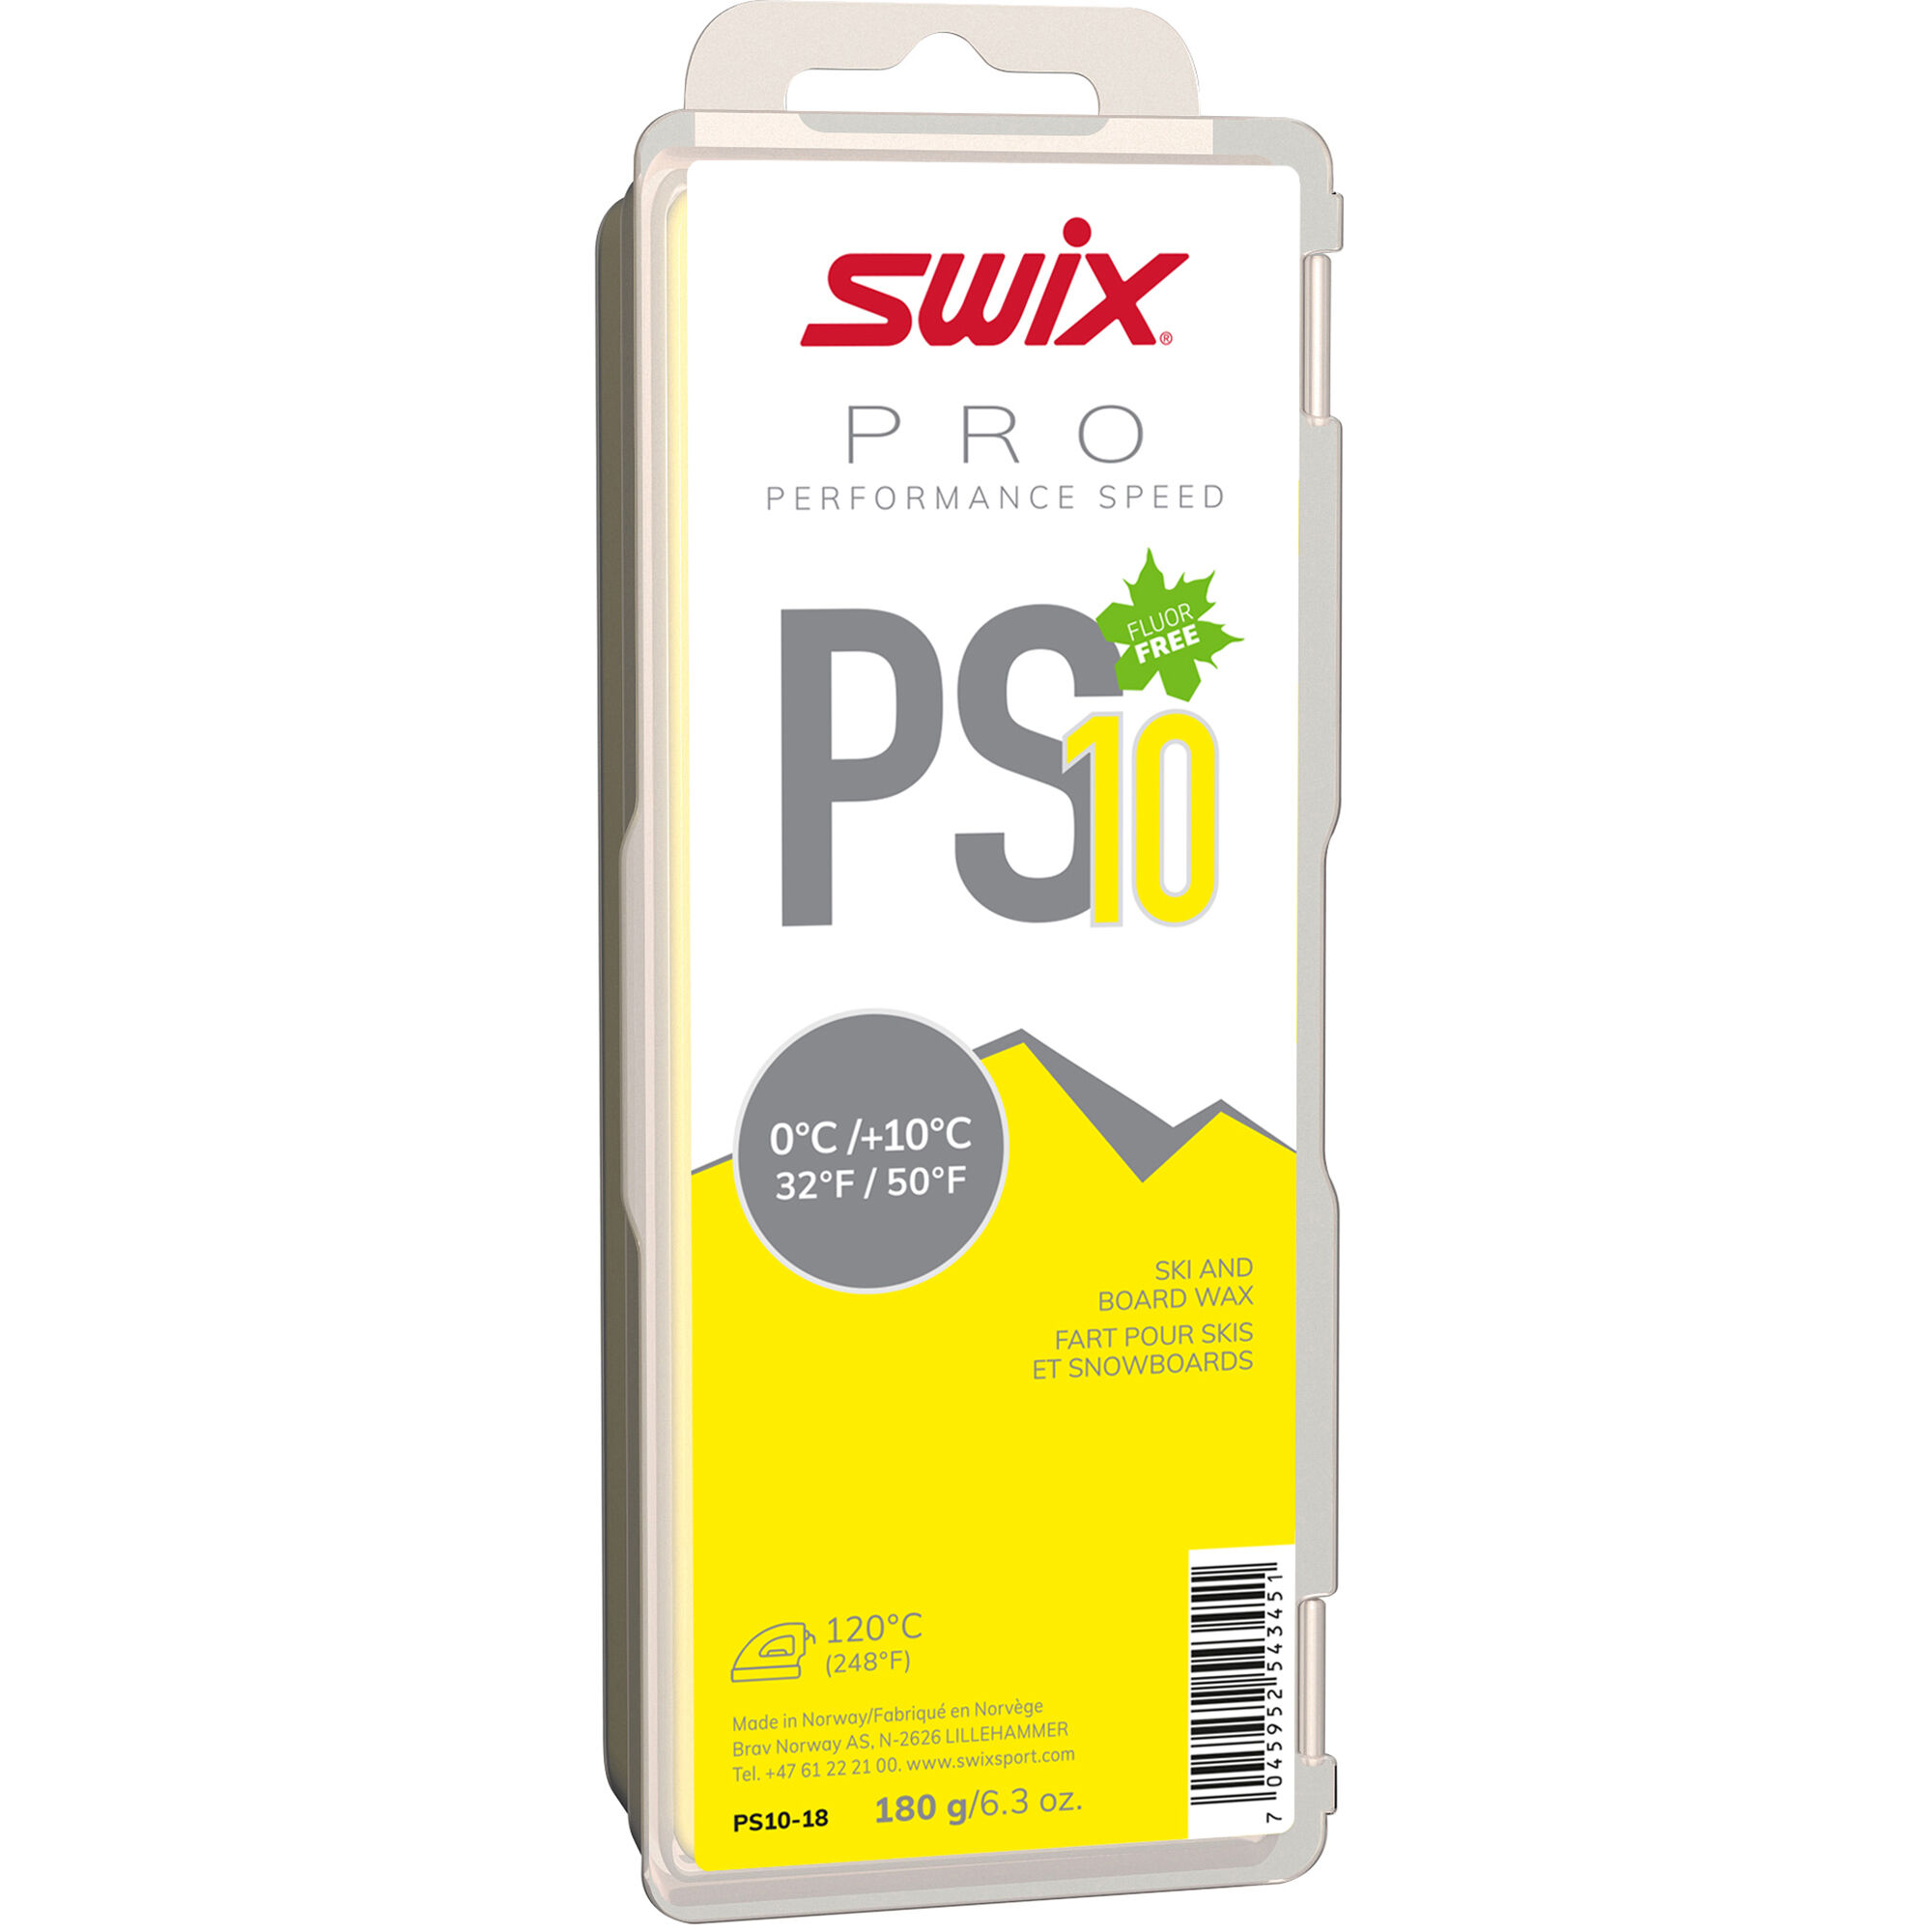 Inside Swix: This is the new fluoro-free ski wax | Swix